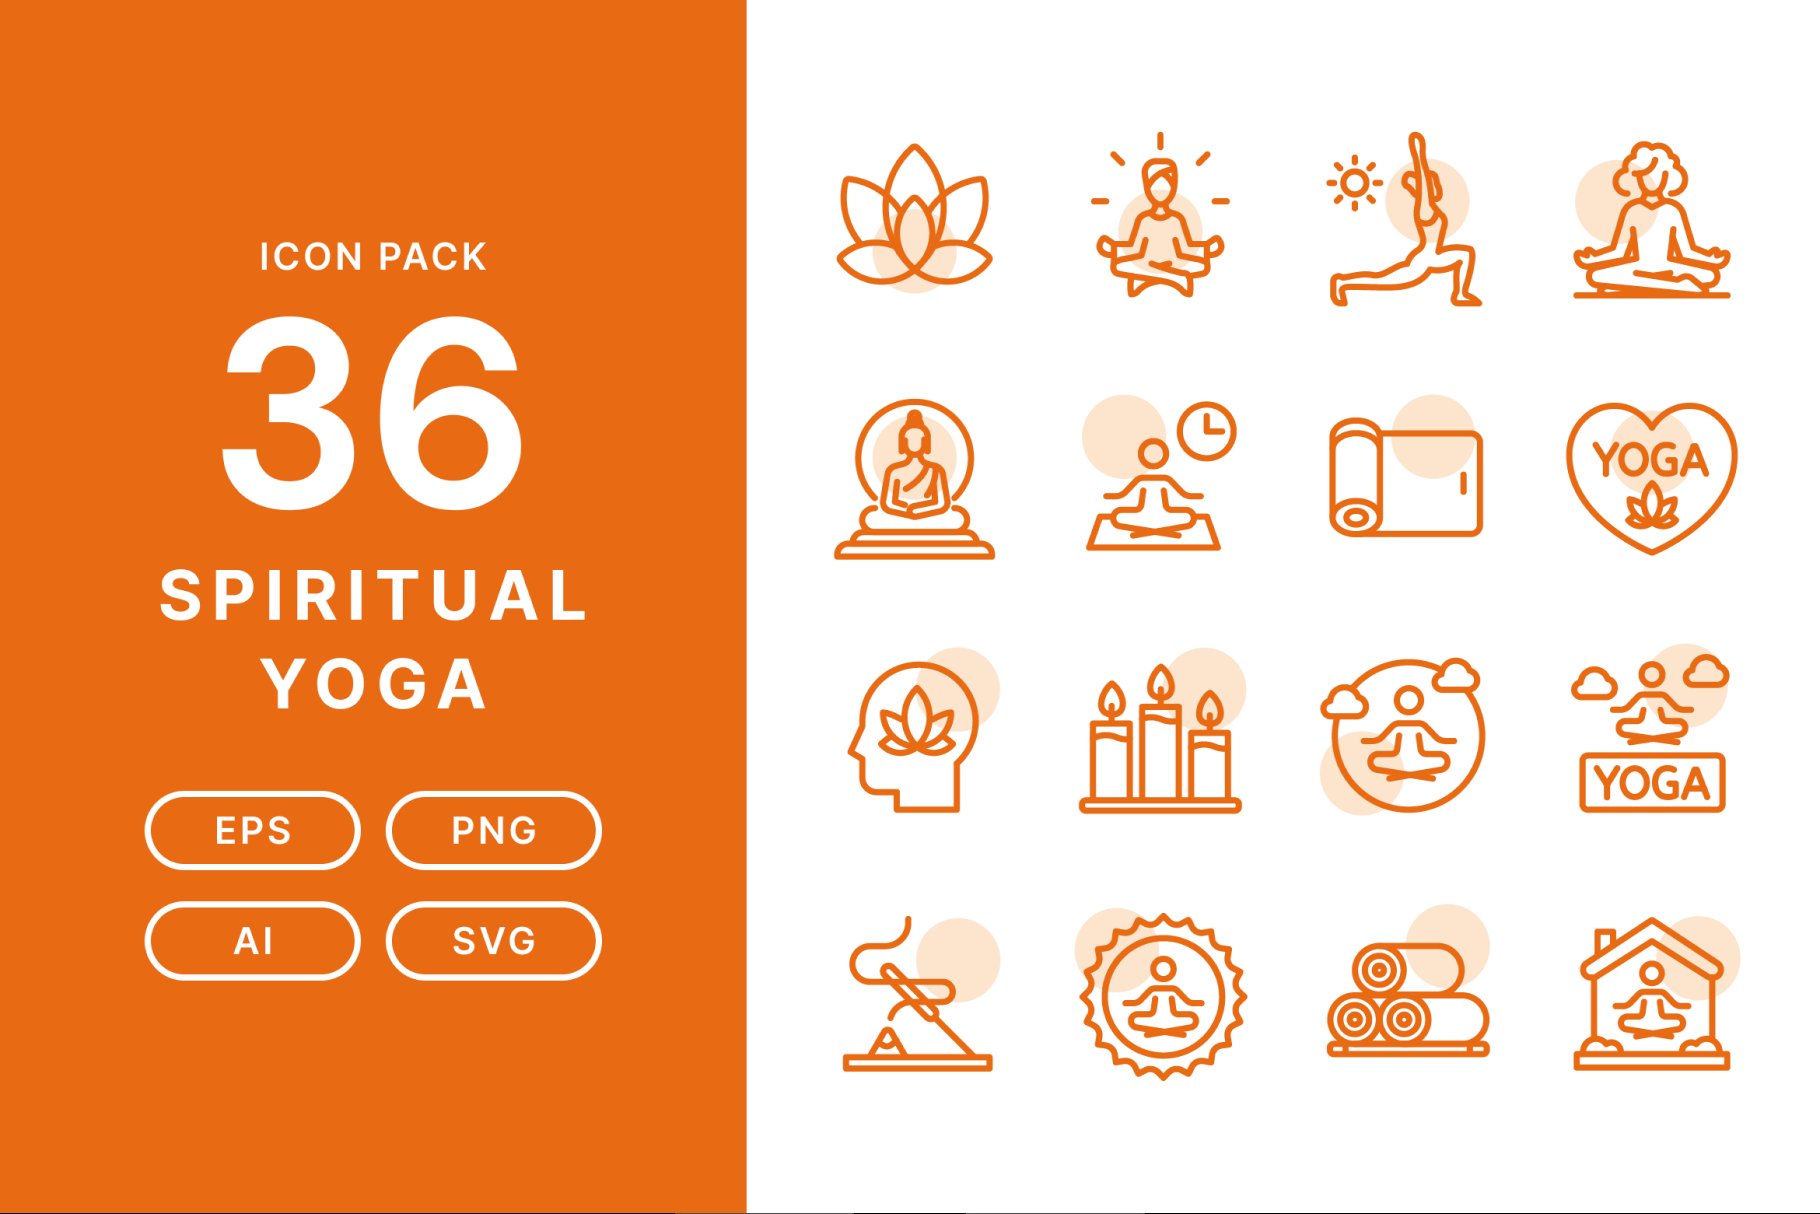 Spiritual Yoga Icon Pack cover image.